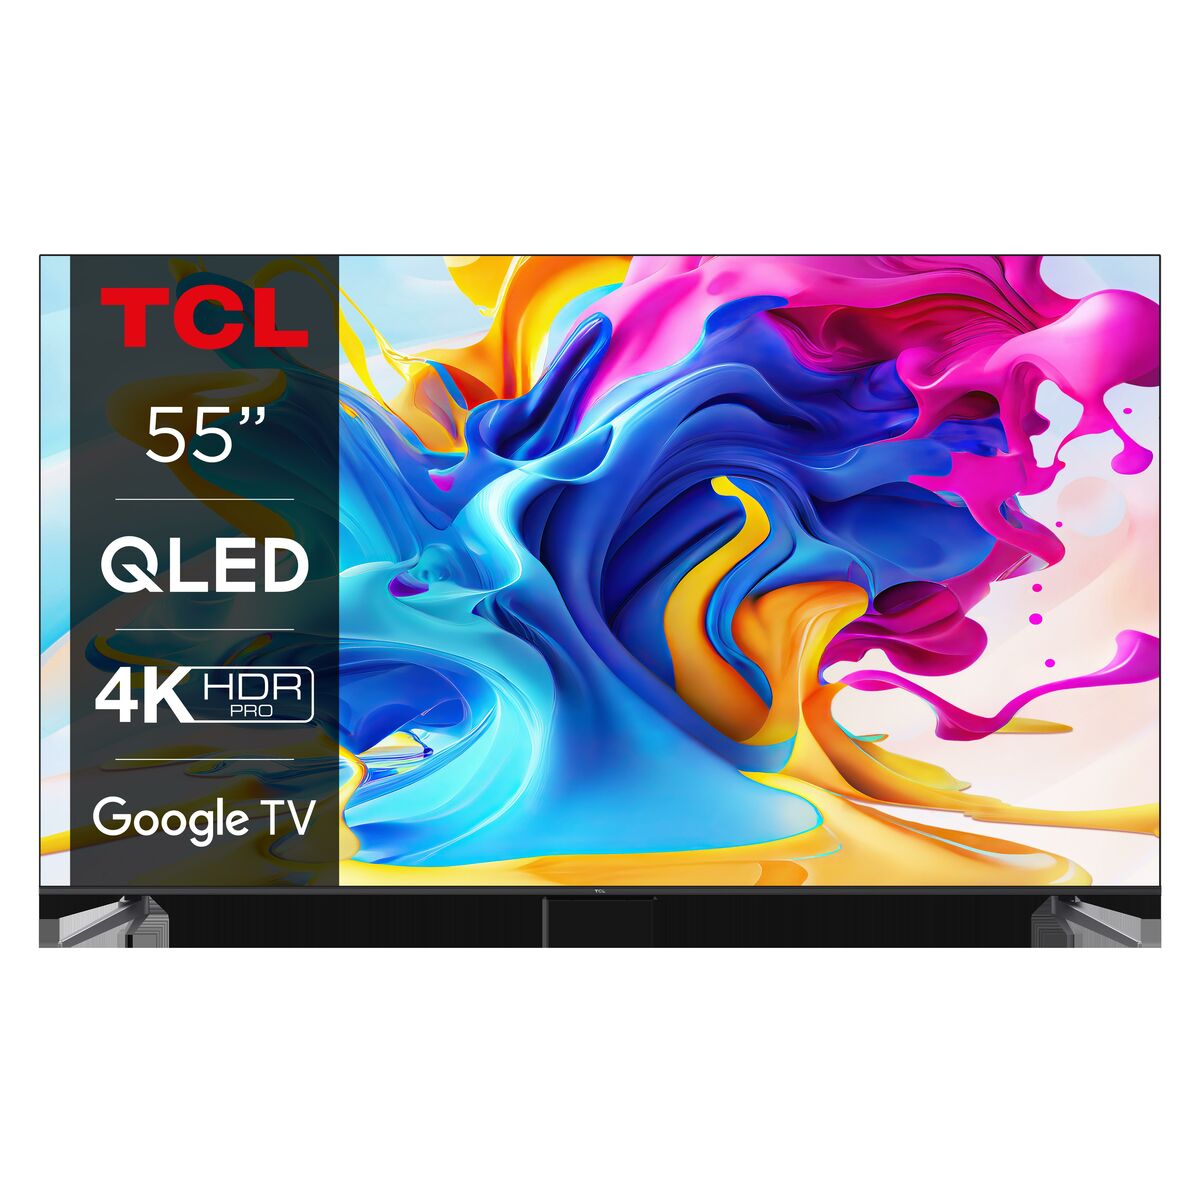 Smart TV Cecotec A2 series ALU20050 4K Ultra HD 50 LED HDR10